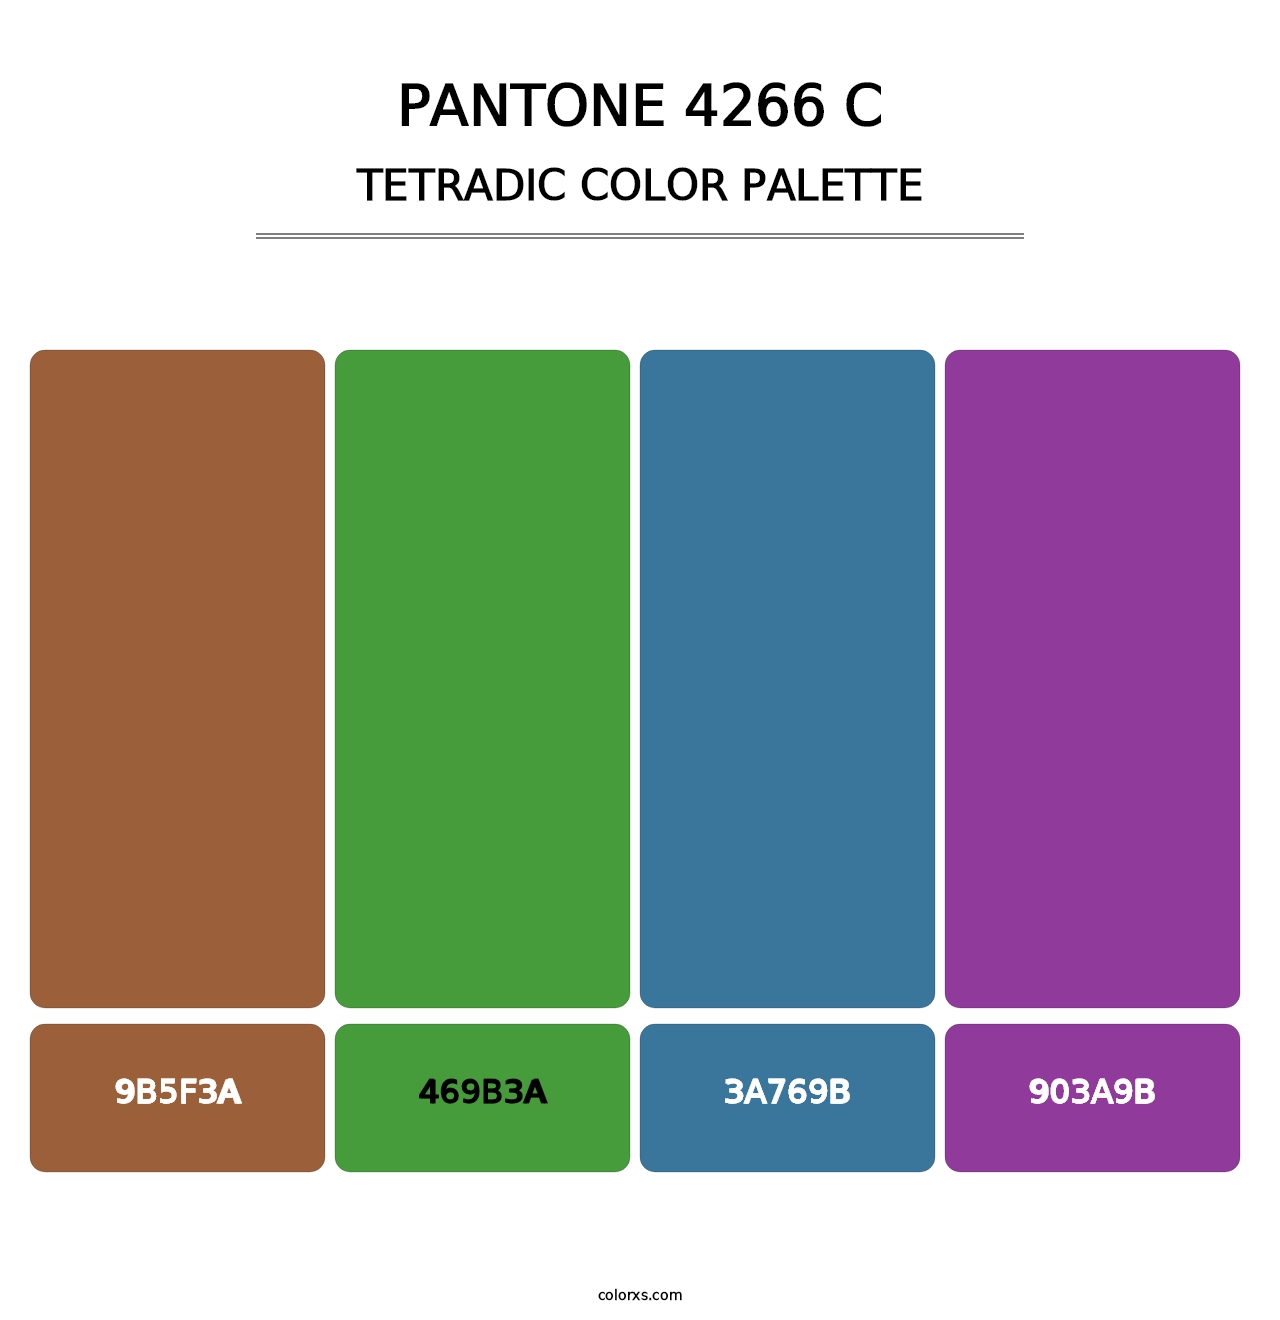 PANTONE 4266 C - Tetradic Color Palette